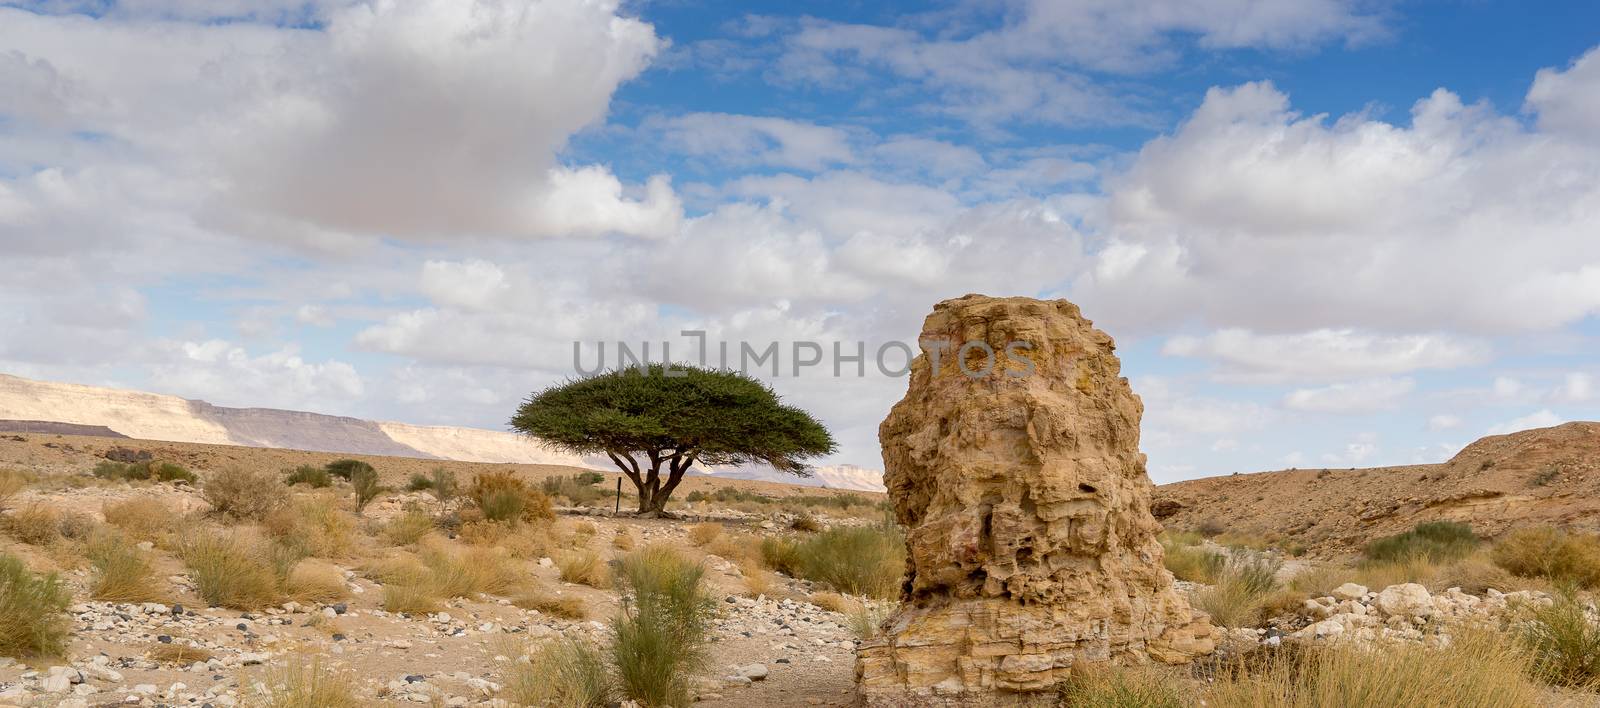 Trekking in Negev dramatic stone desert, Israel  by javax